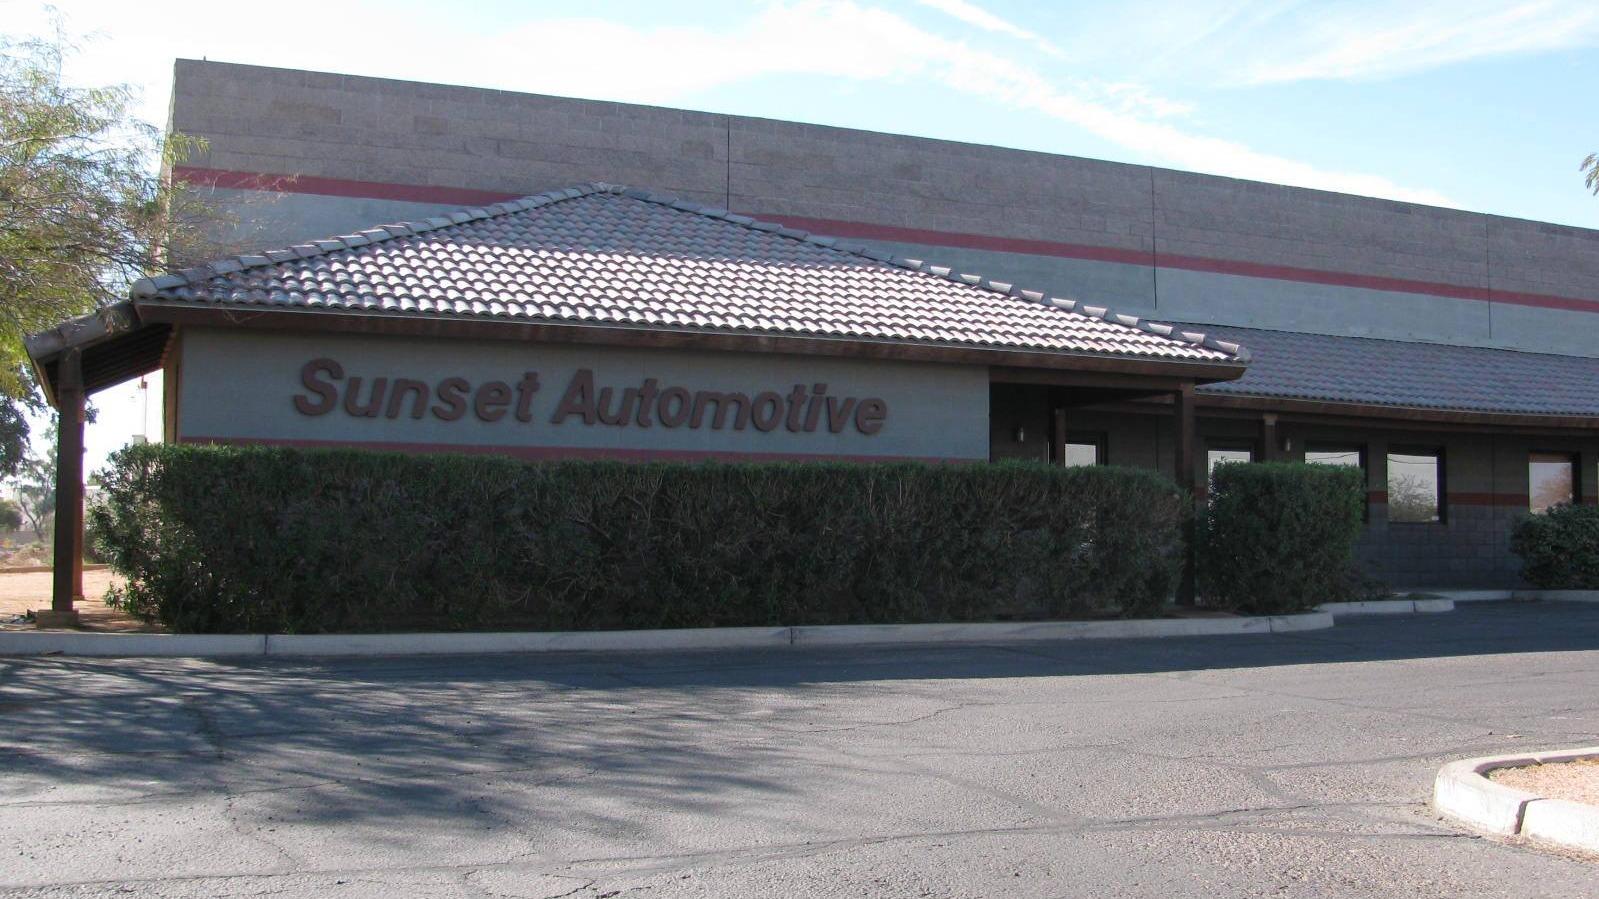 Sunset Automotive, Inc